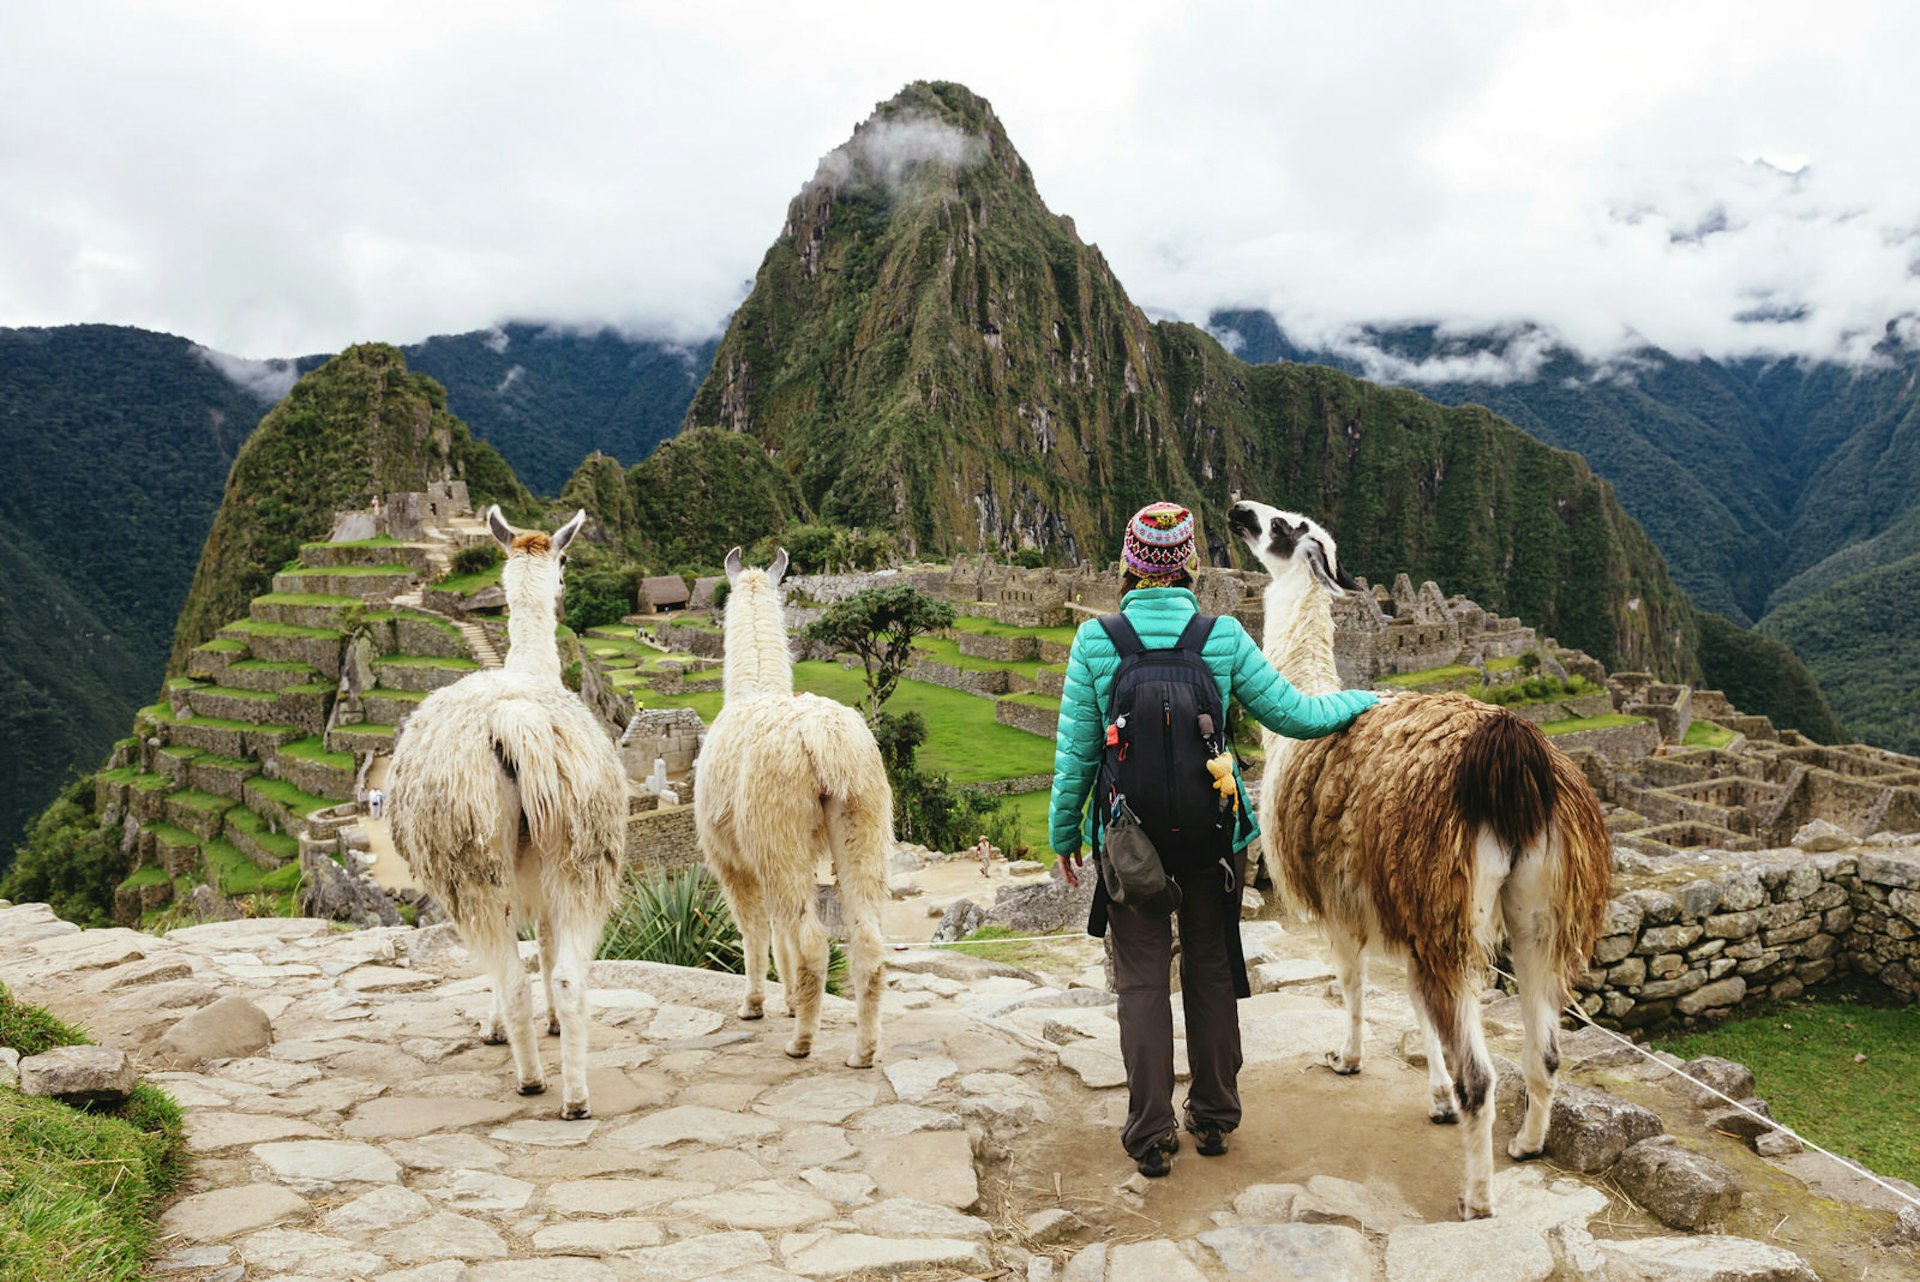 wedding anniversary trip ideas - A traveller poses at Machu Picchu with an alpaca.